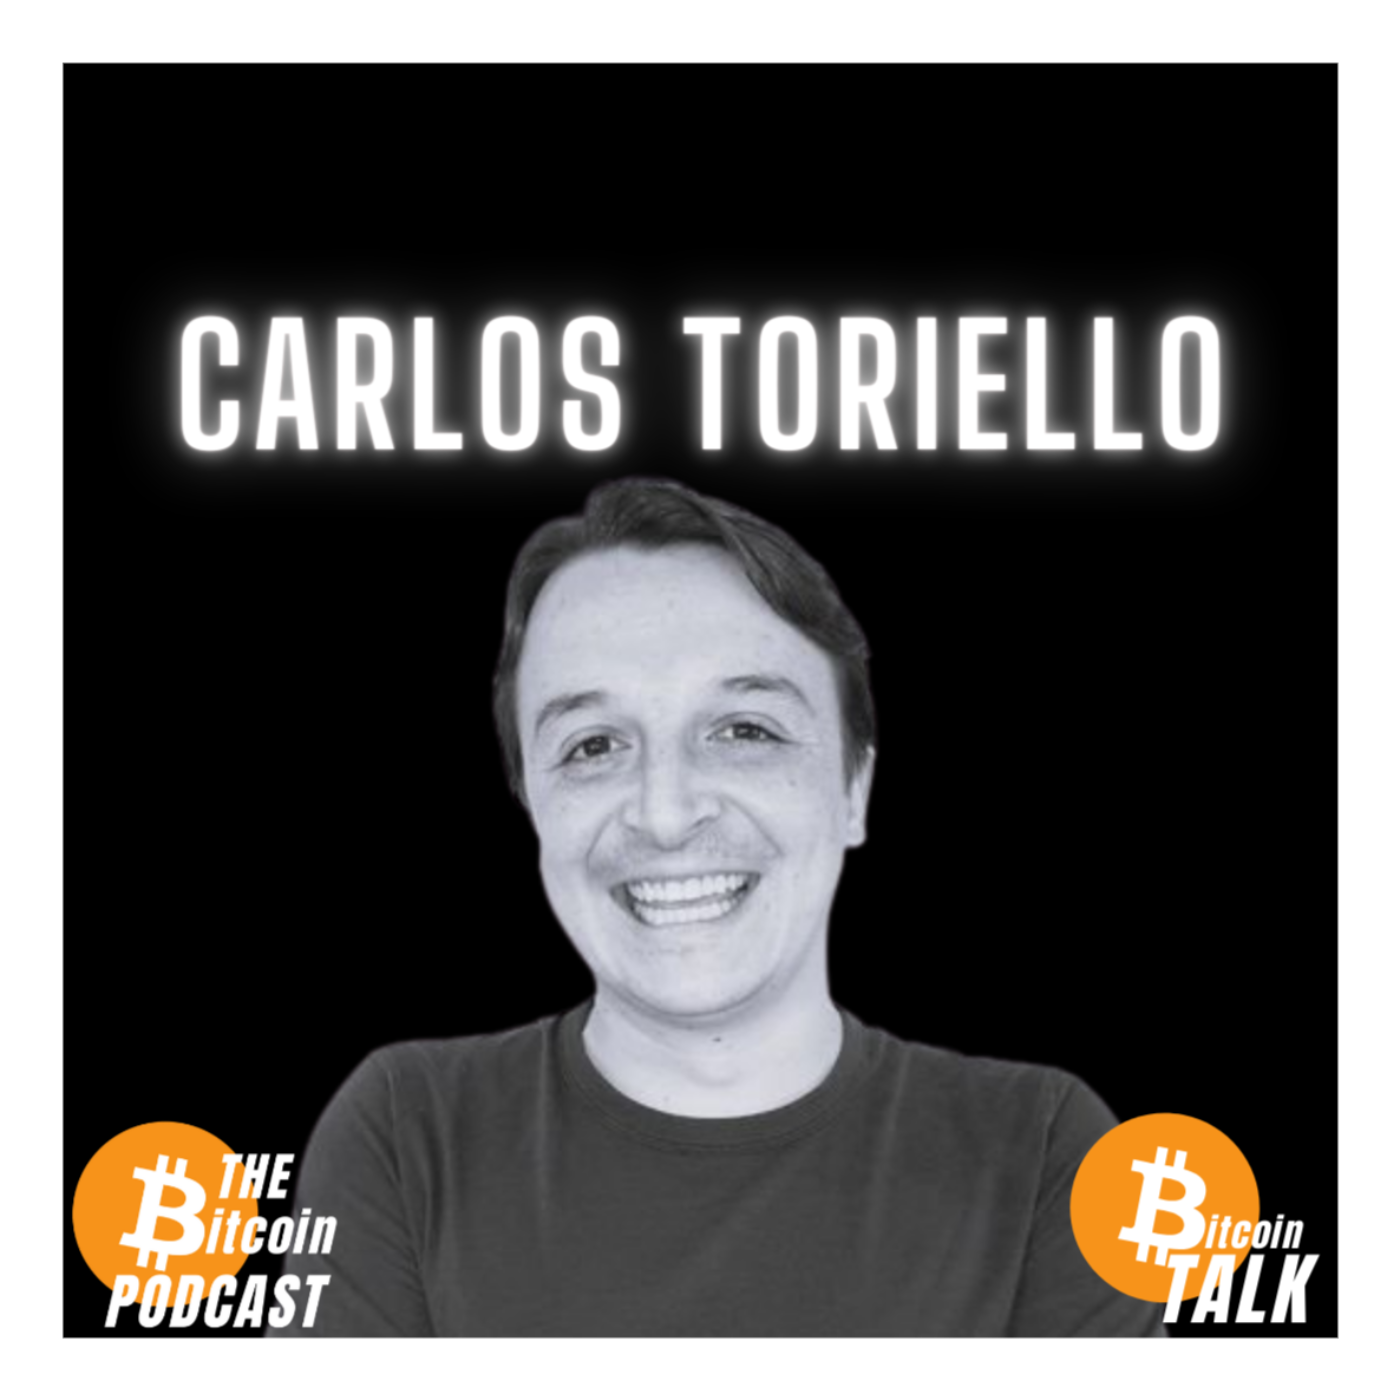 Immutable Democracy with Bitcoin: Carlos Toriello (Bitcoin Talk on THE Bitcoin Podcast)